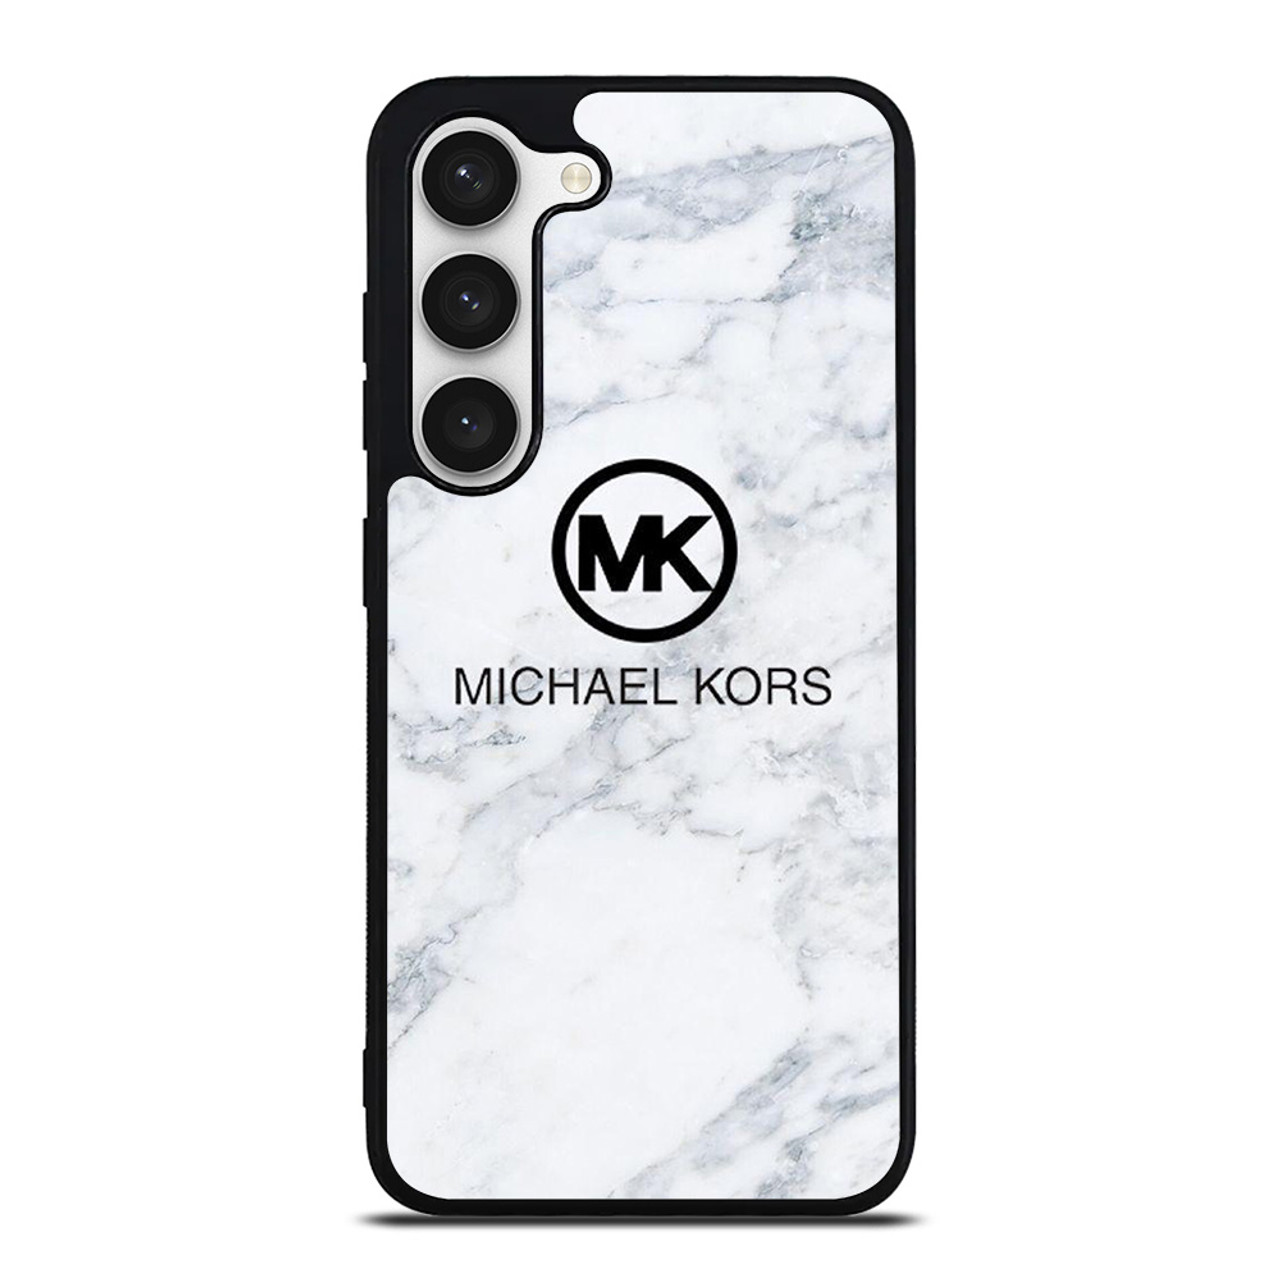 MICHAEL KORS LOGO iPhone 12 Mini Case